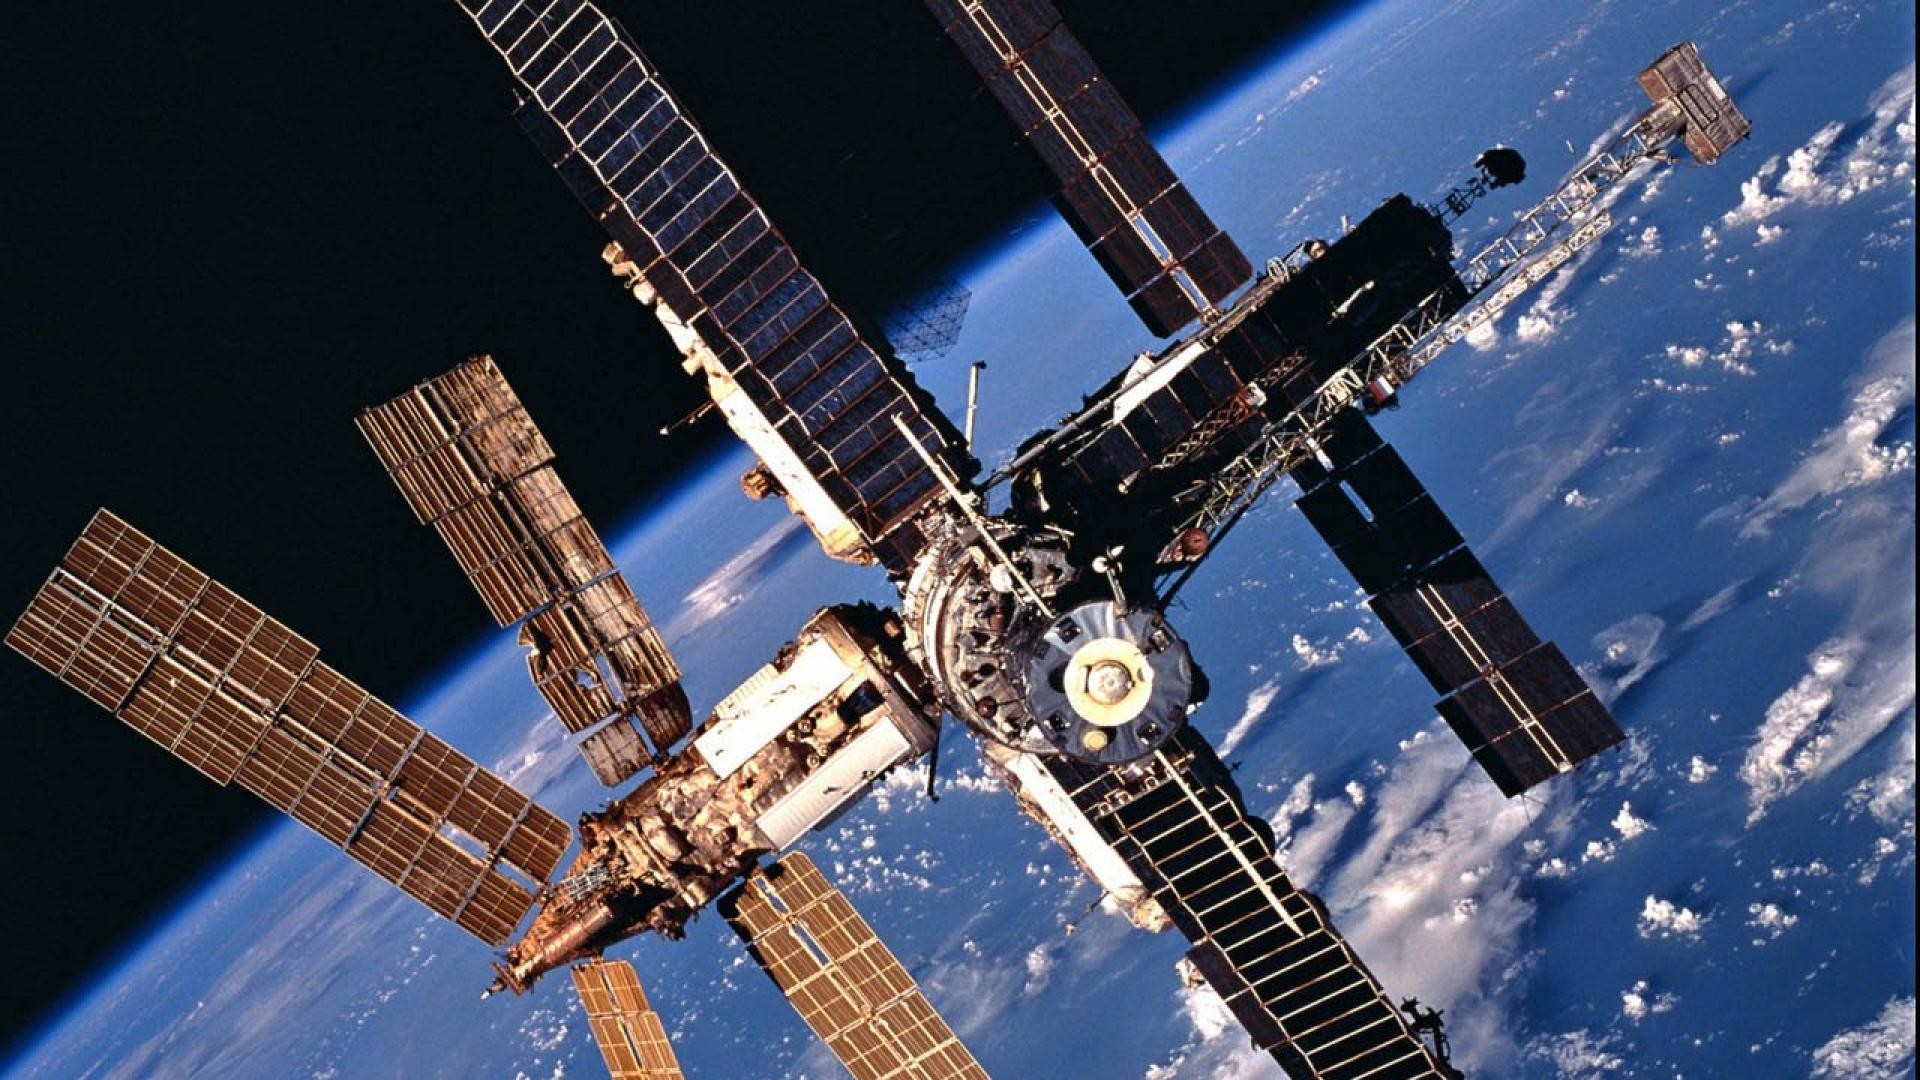 Mir org. Орбитальная станция мир 1986. Орбитальные станции «мир» и «МКС». Первая многомодульная орбитальная станция («мир»).. Станция мир и МКС.